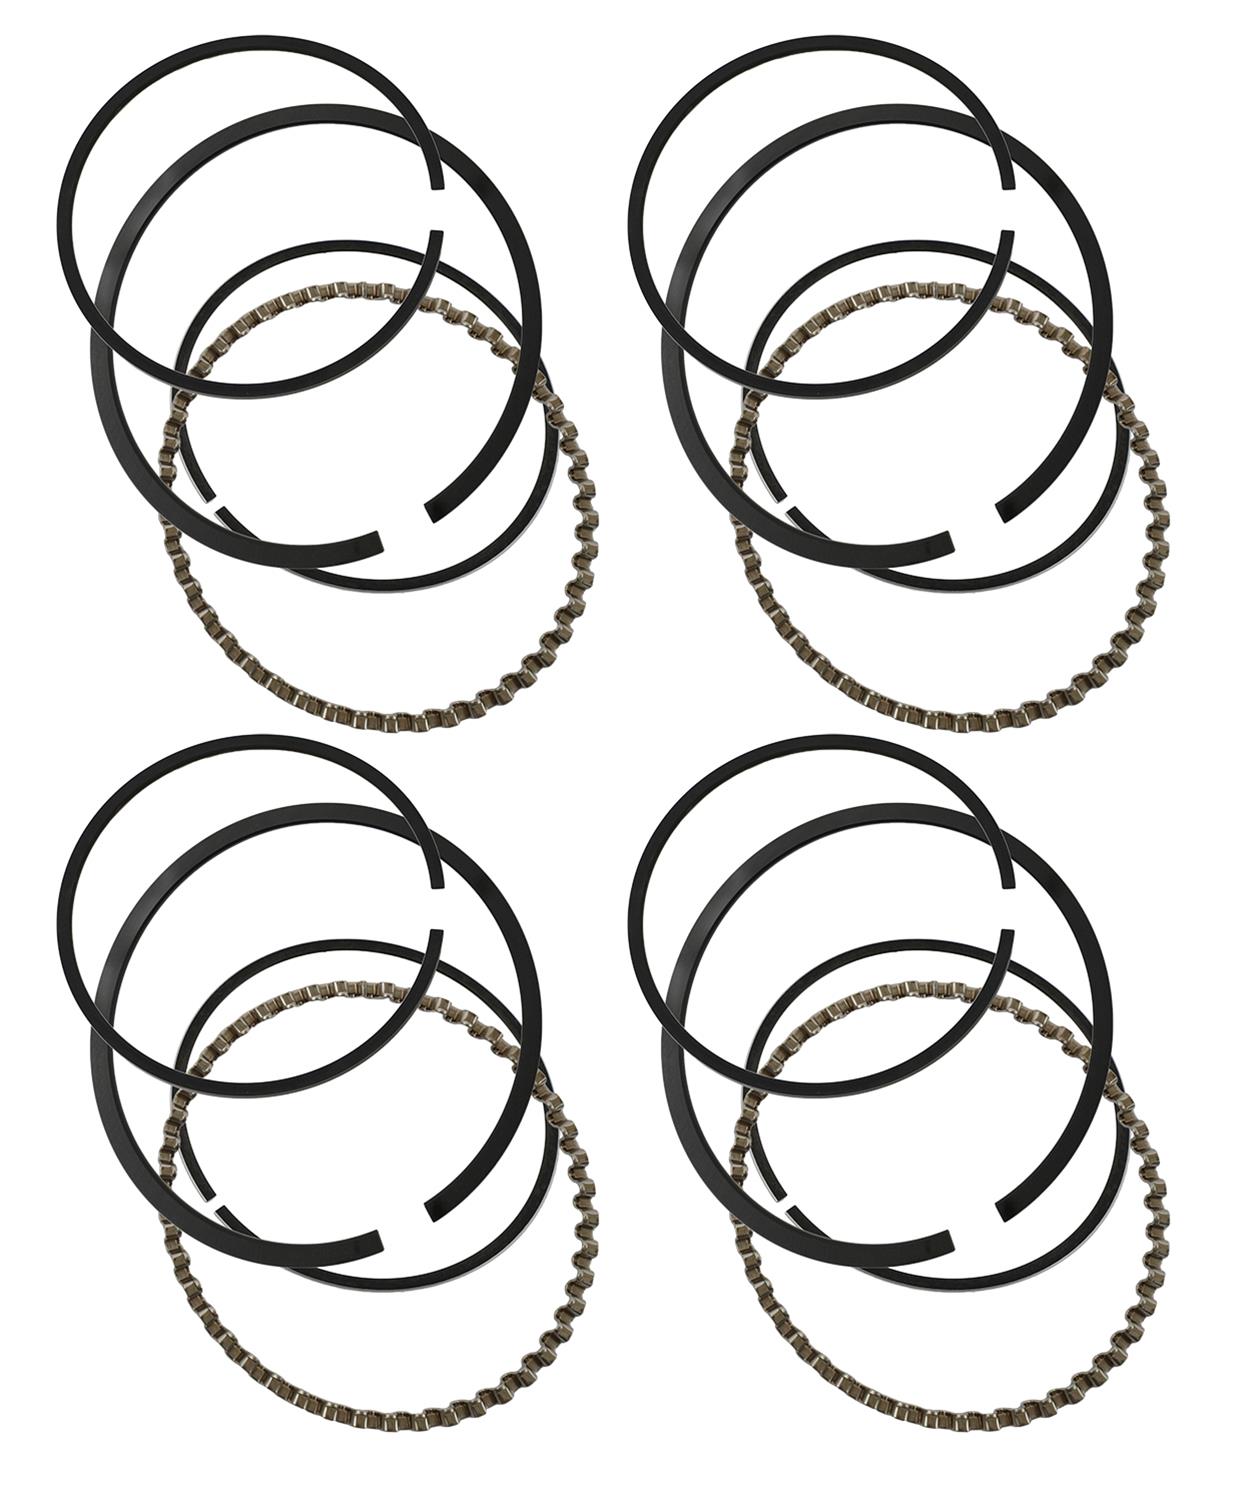 Hastings 6876030 6-Cylinder Piston Ring Set 